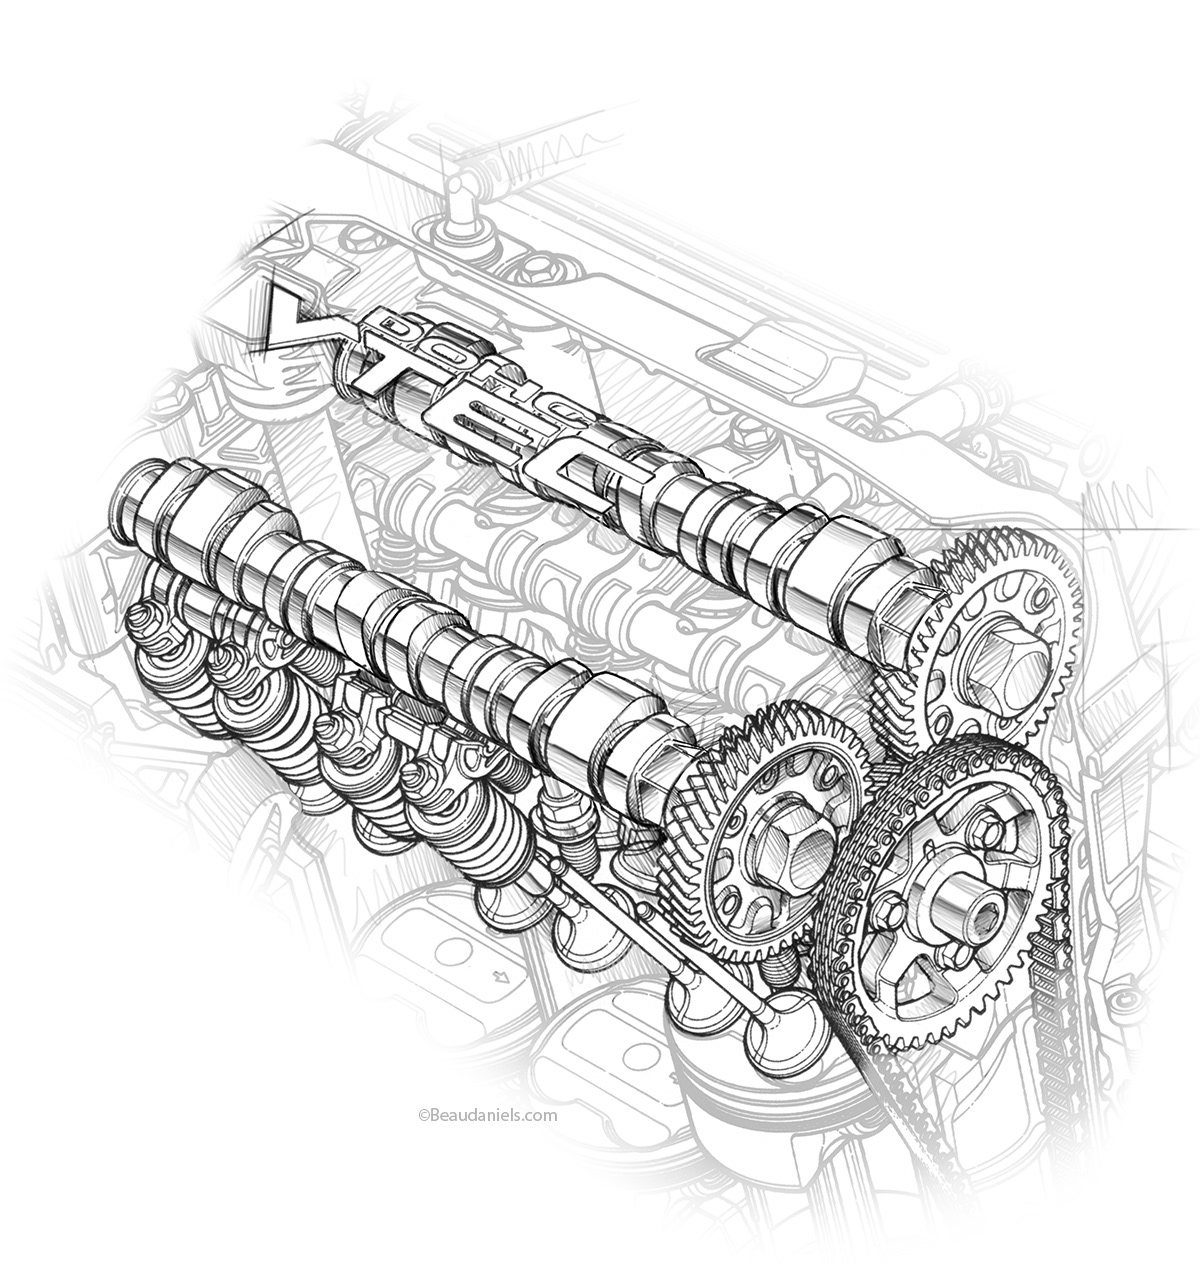 Technical illustration, Beau and Alan Daniels. - Honda S2000 drawings